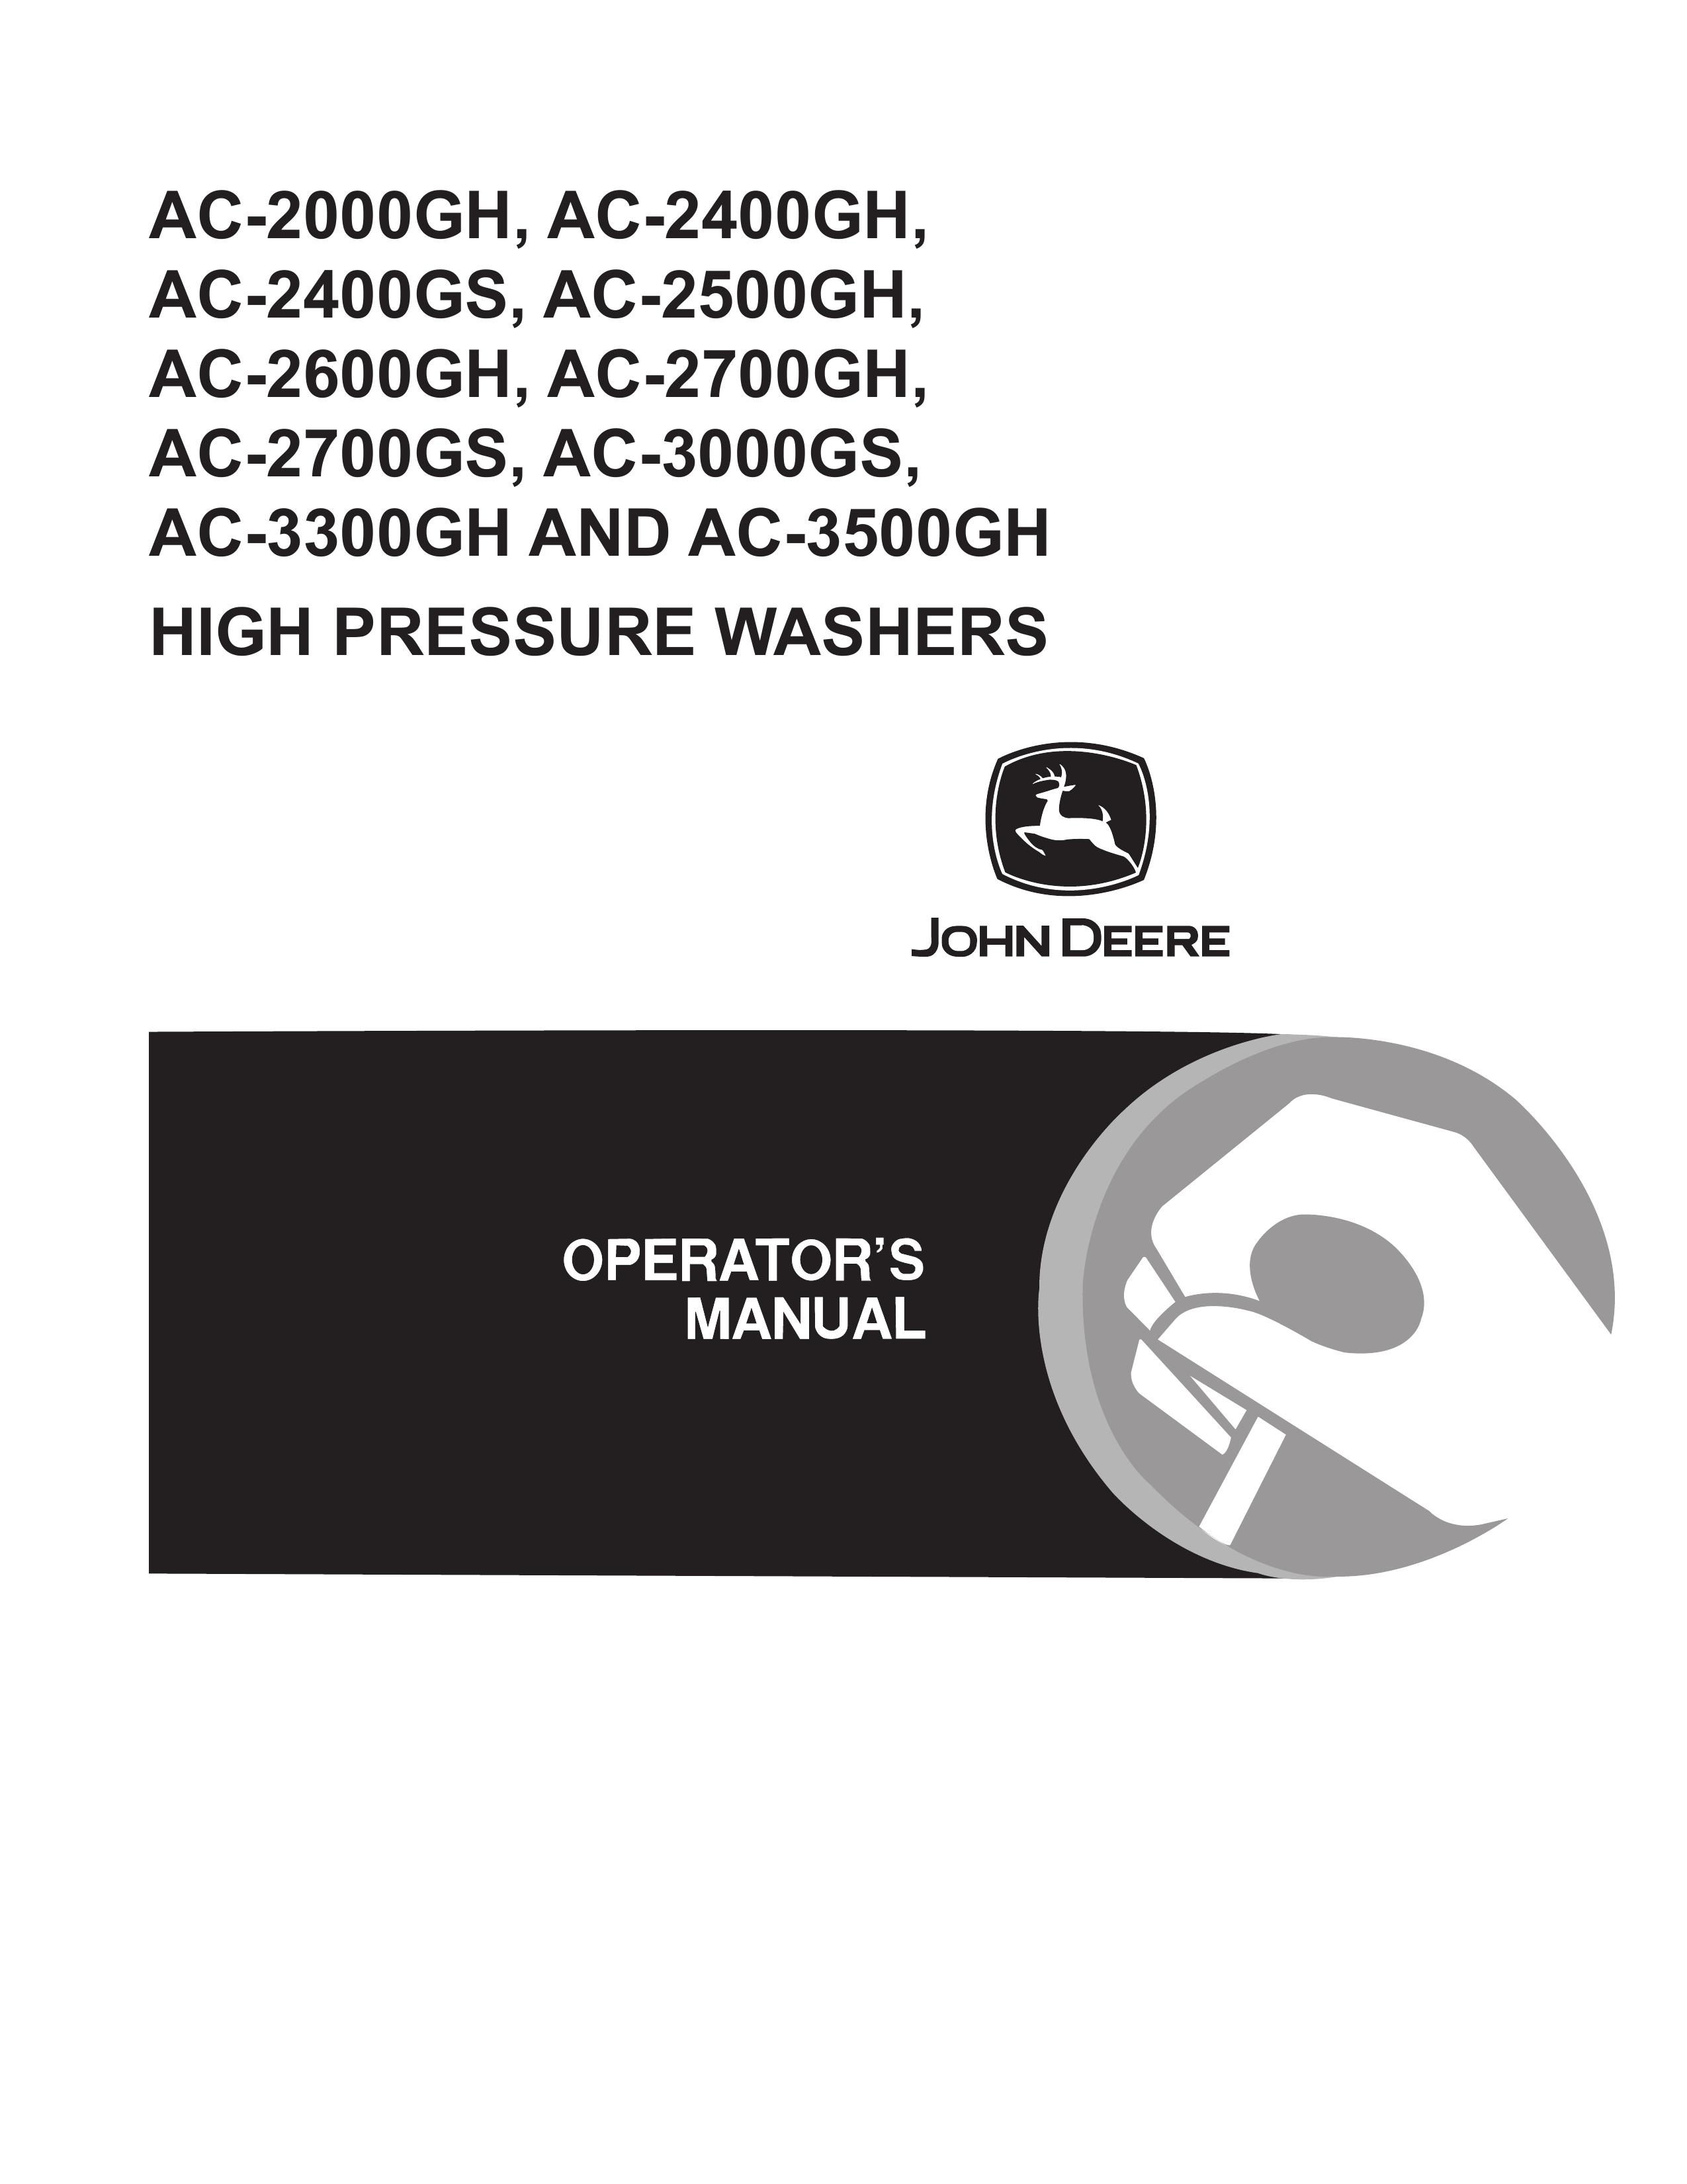 John Deere AC-2700GH Washer User Manual